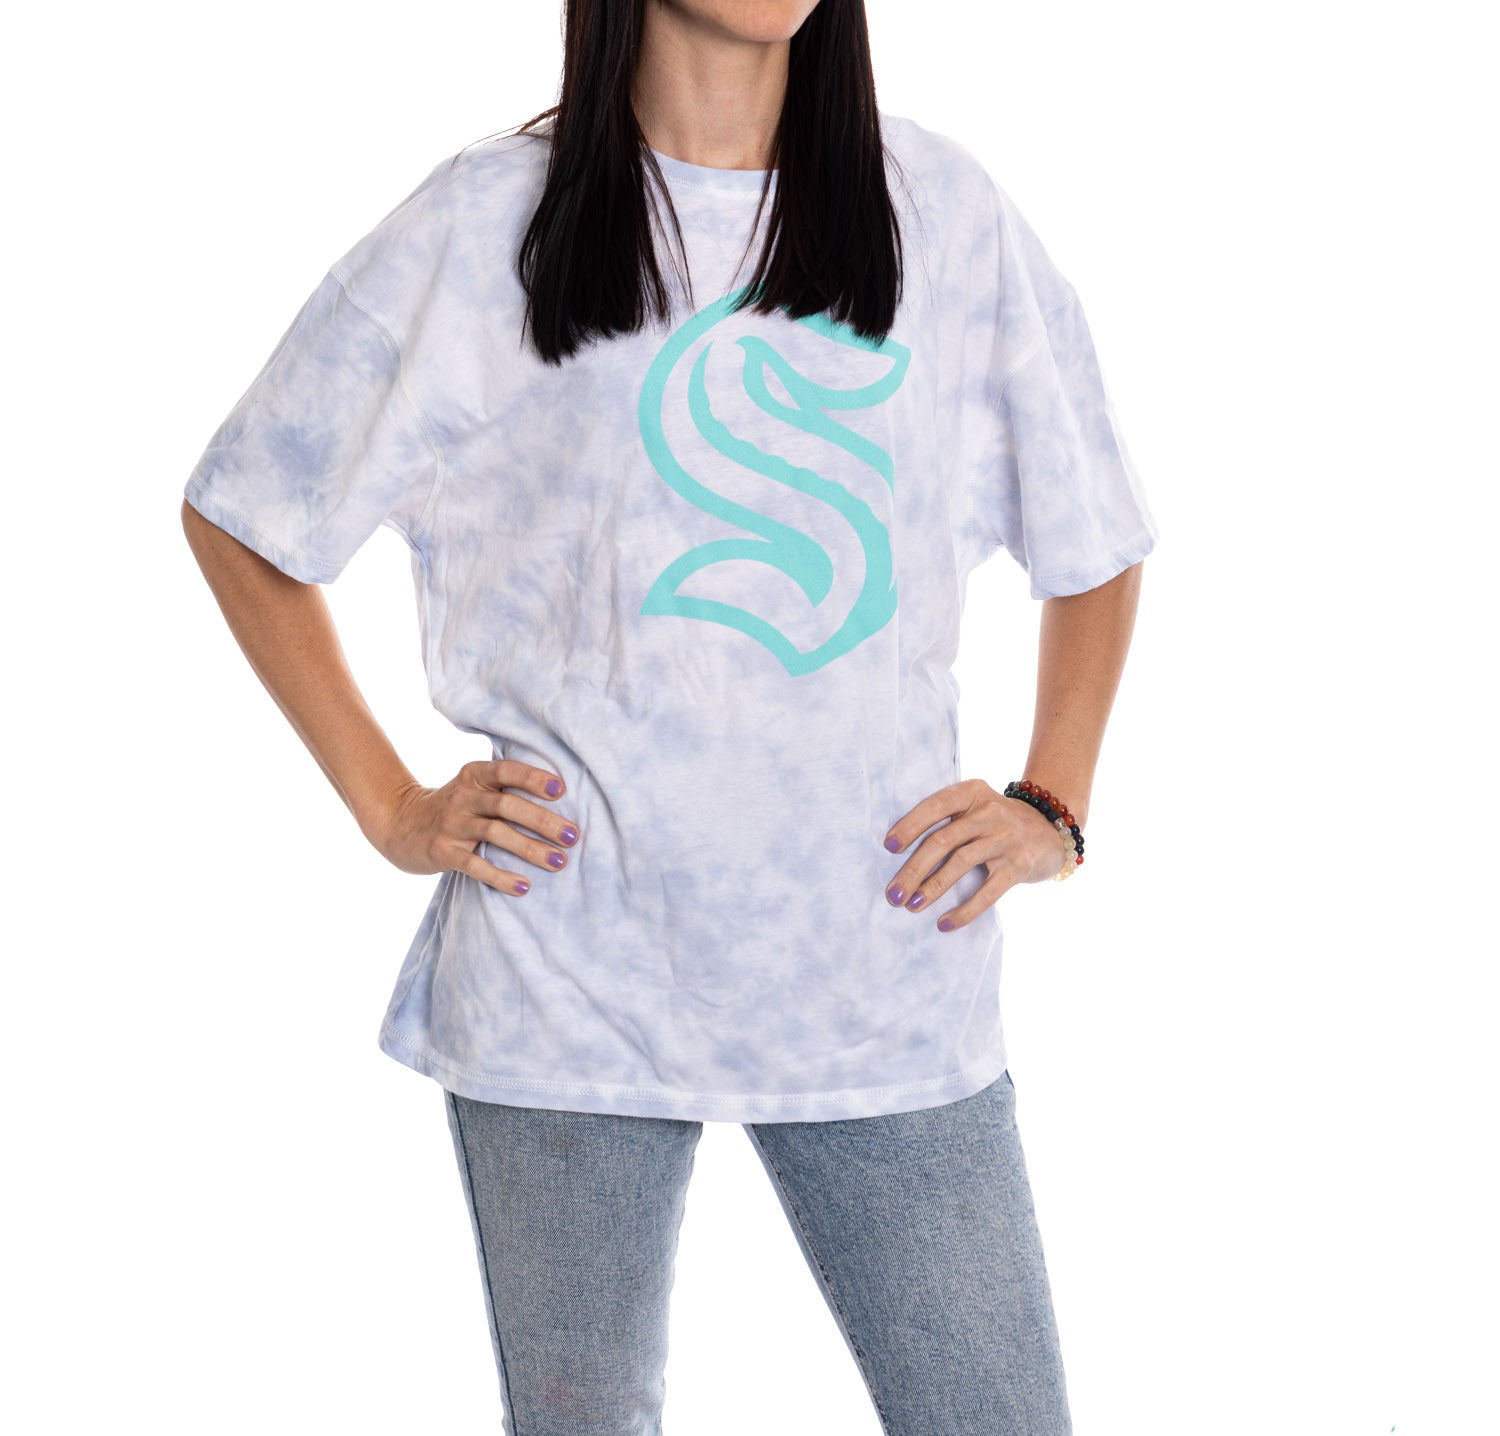 Women's Fanatics Branded Deep Sea Blue Seattle Kraken Territorial V-Neck T-Shirt Size: Small